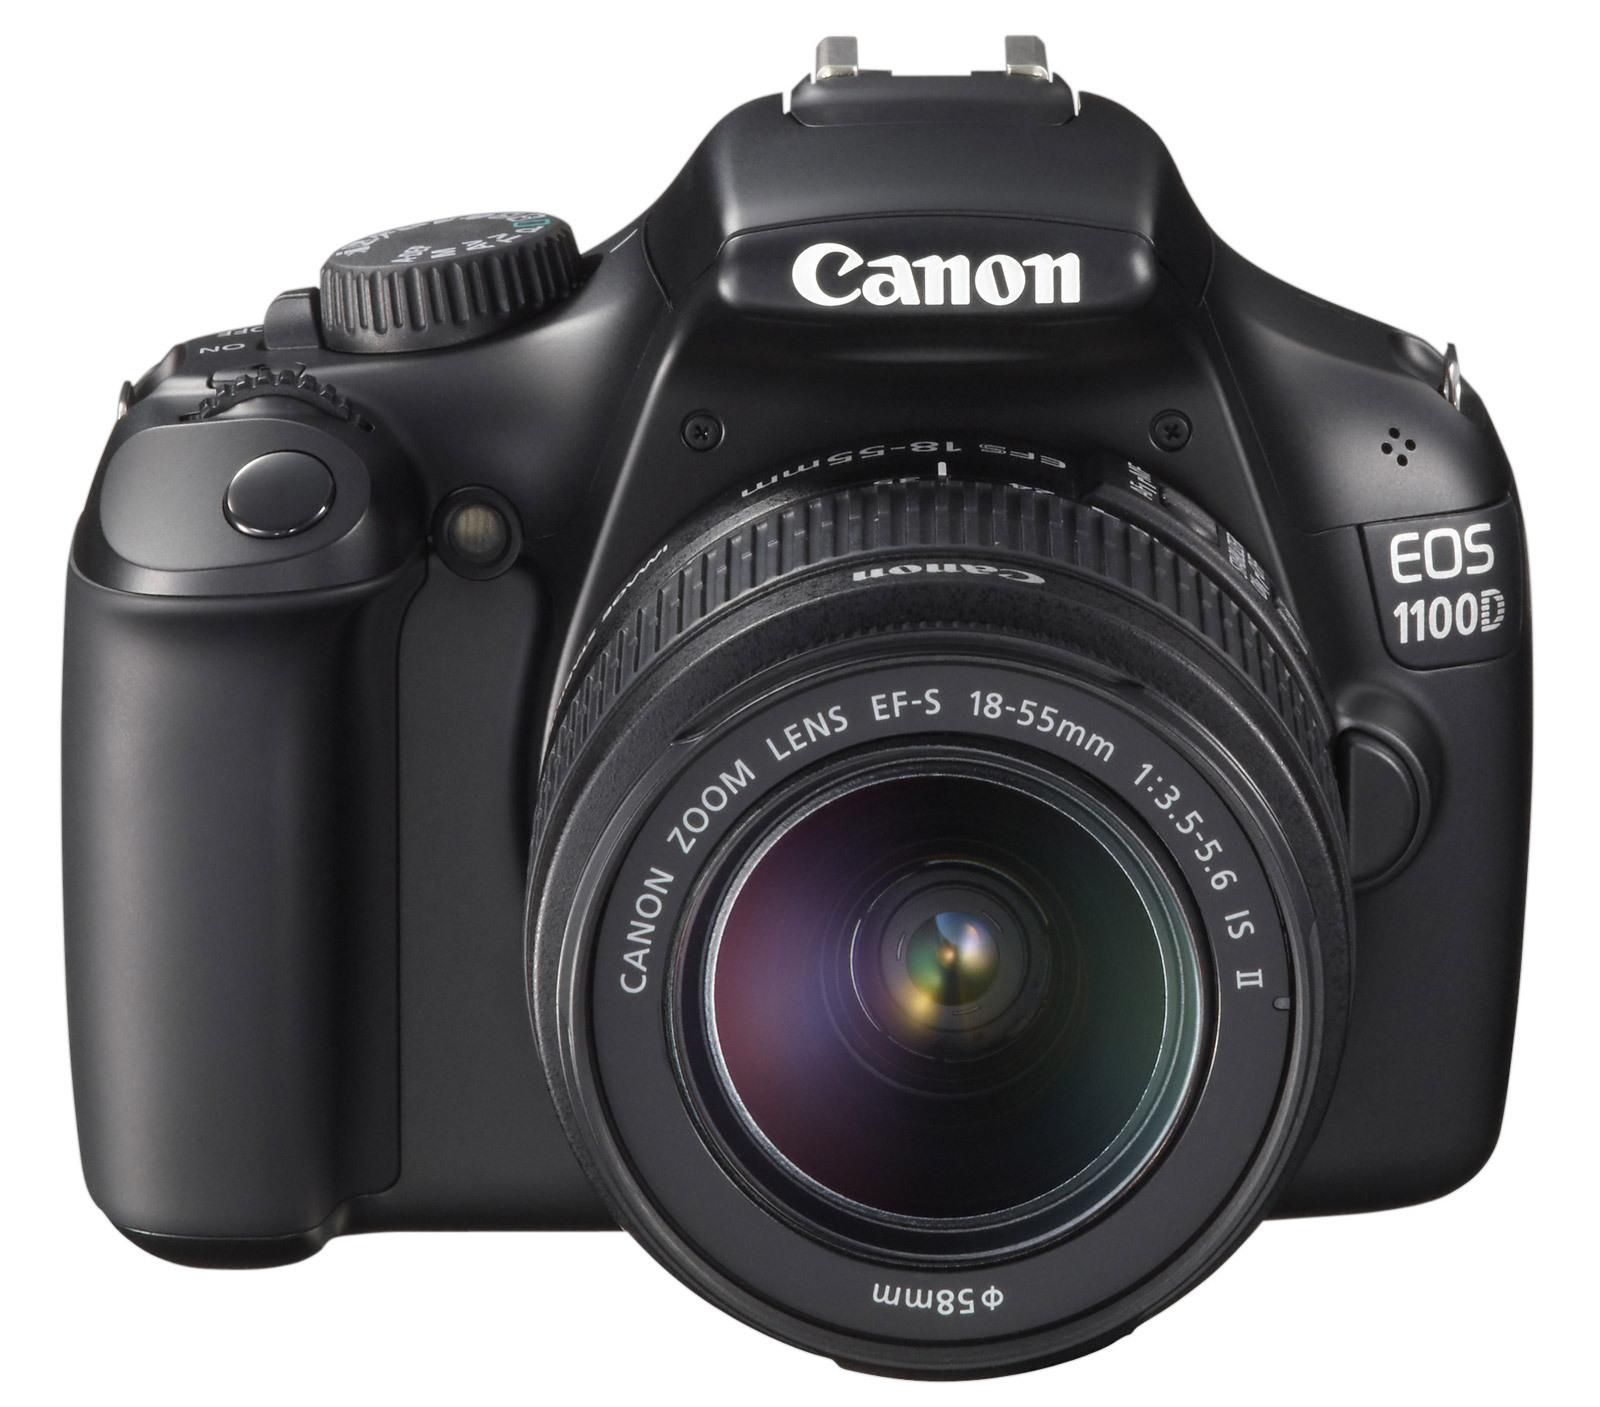 Foto Canon 1100d + ef-s 18-55mm eos, 12.2 mp, slr kit, cmos, 4272 x foto 382992